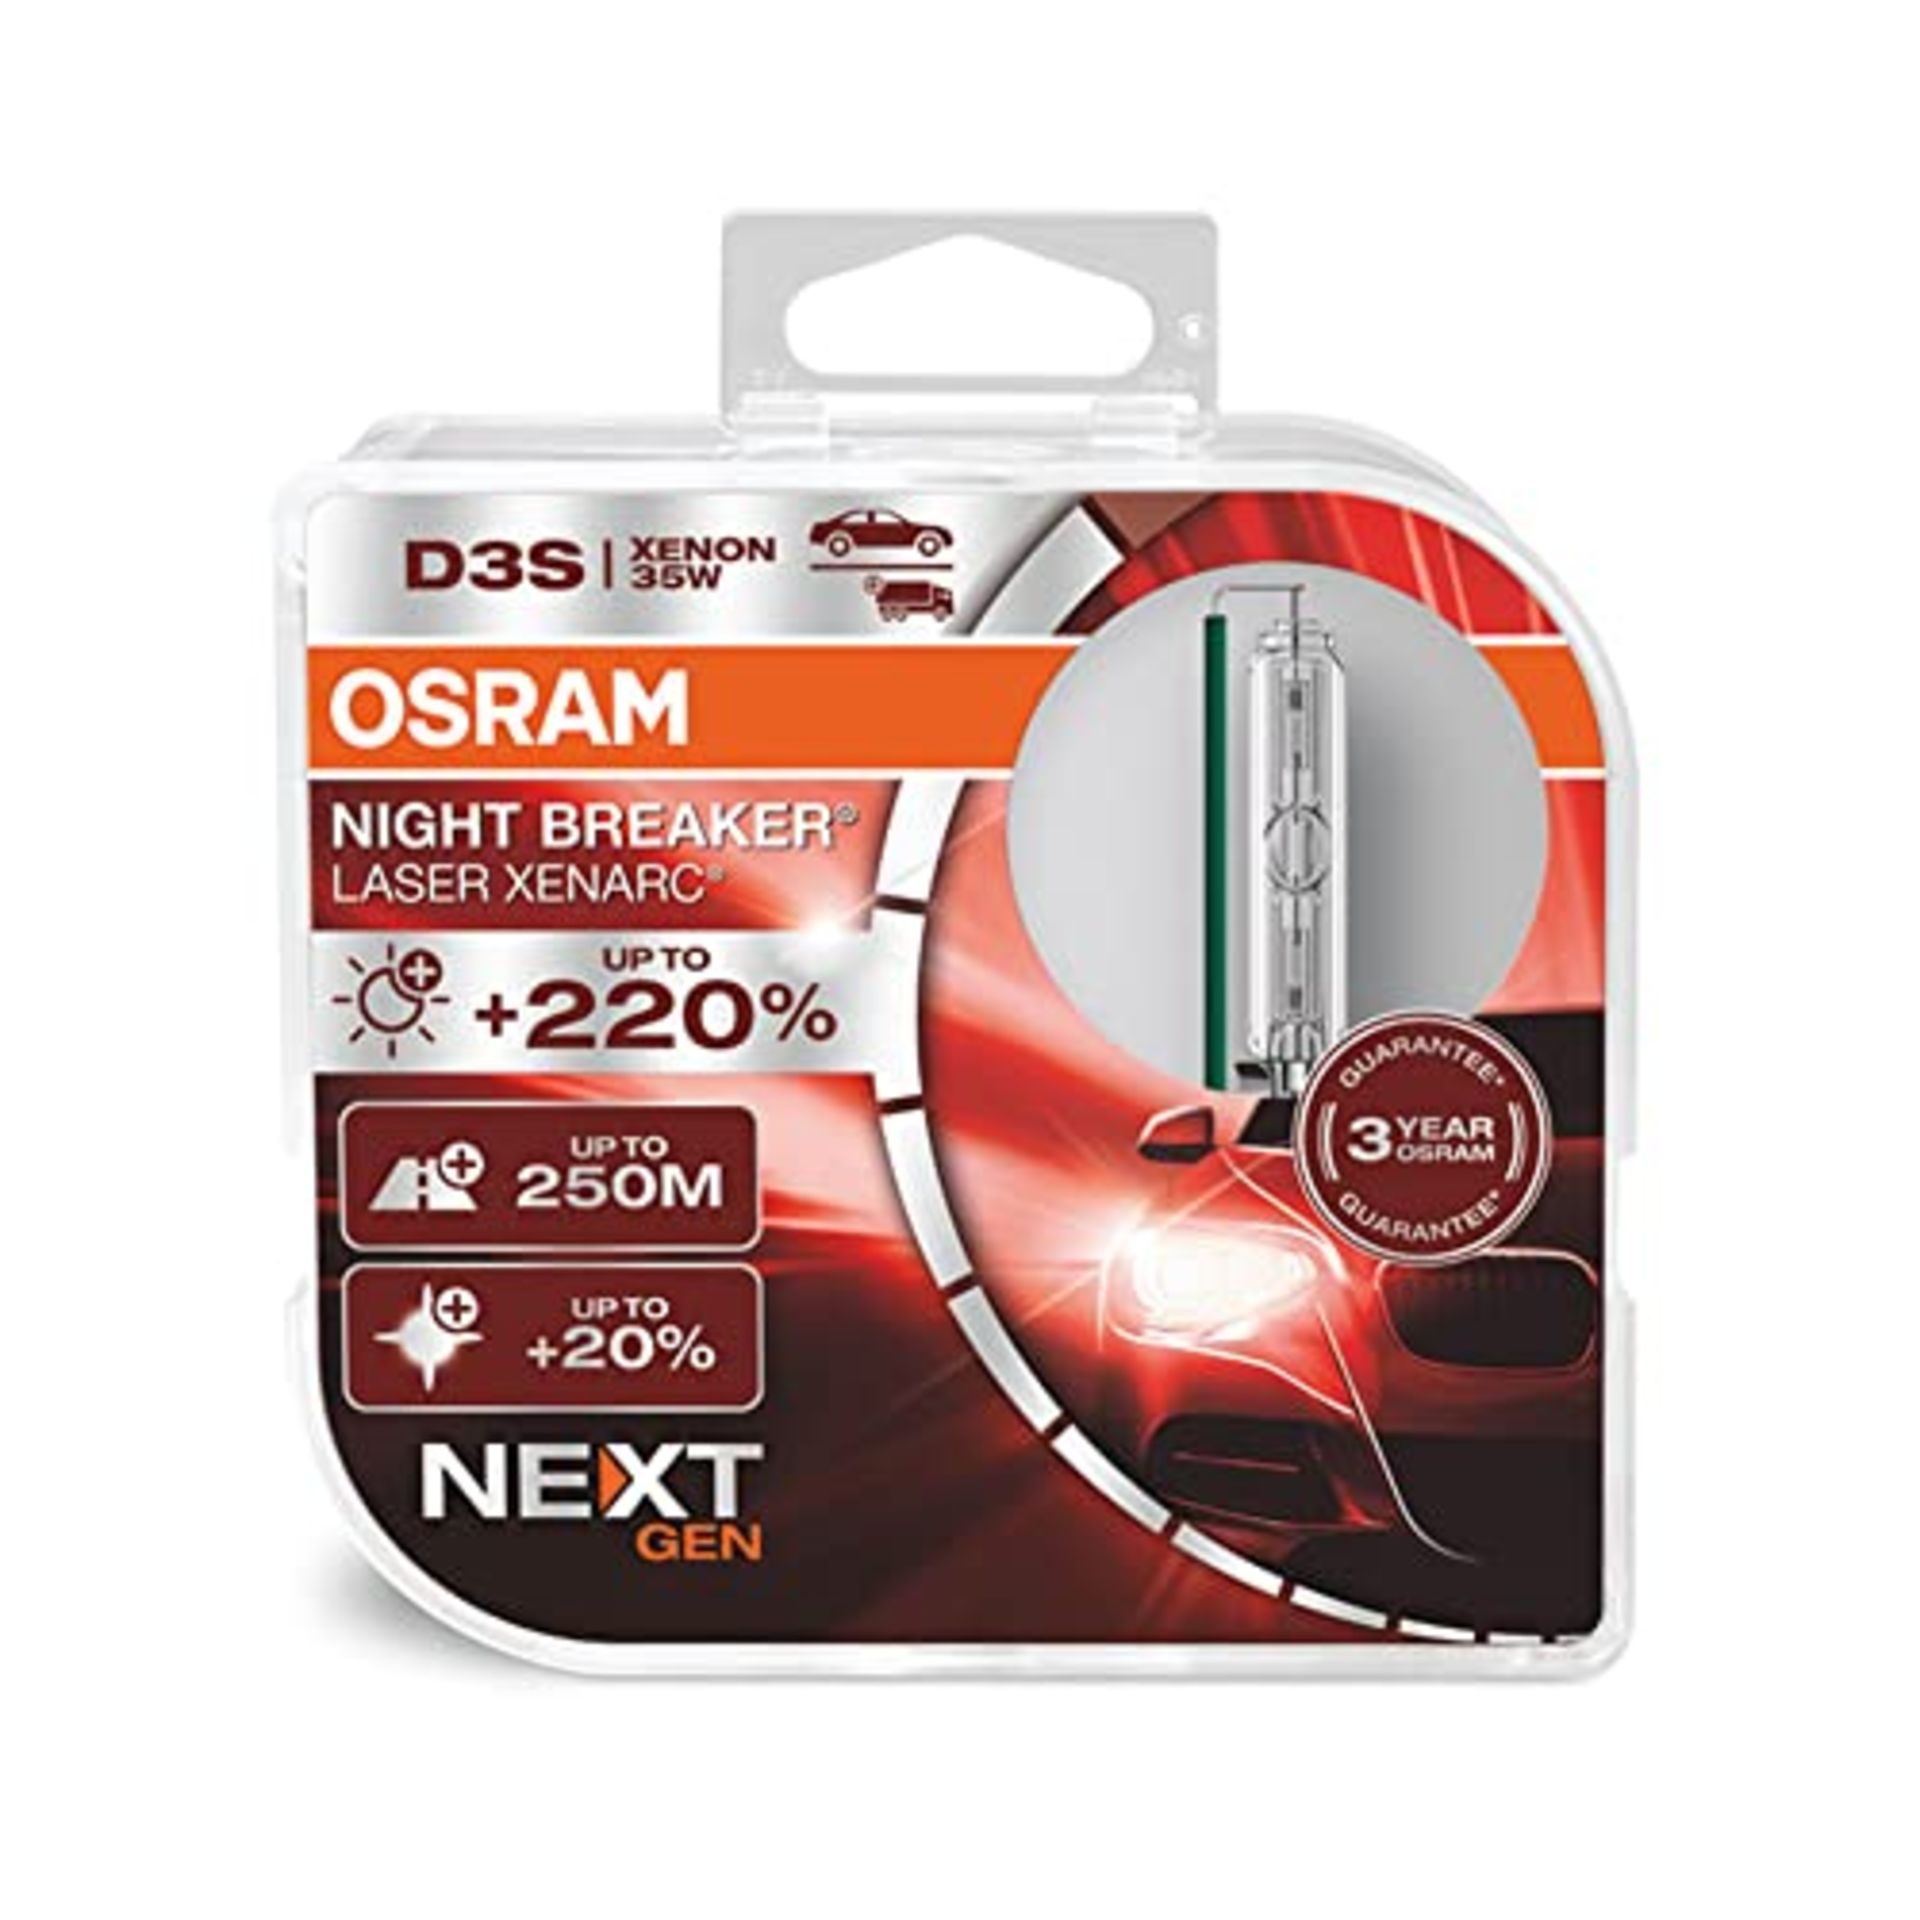 RRP £151.00 OSRAM XENARC NIGHT BREAKER LASER D3S, Next Generation, 220% more brightness, HID xenon